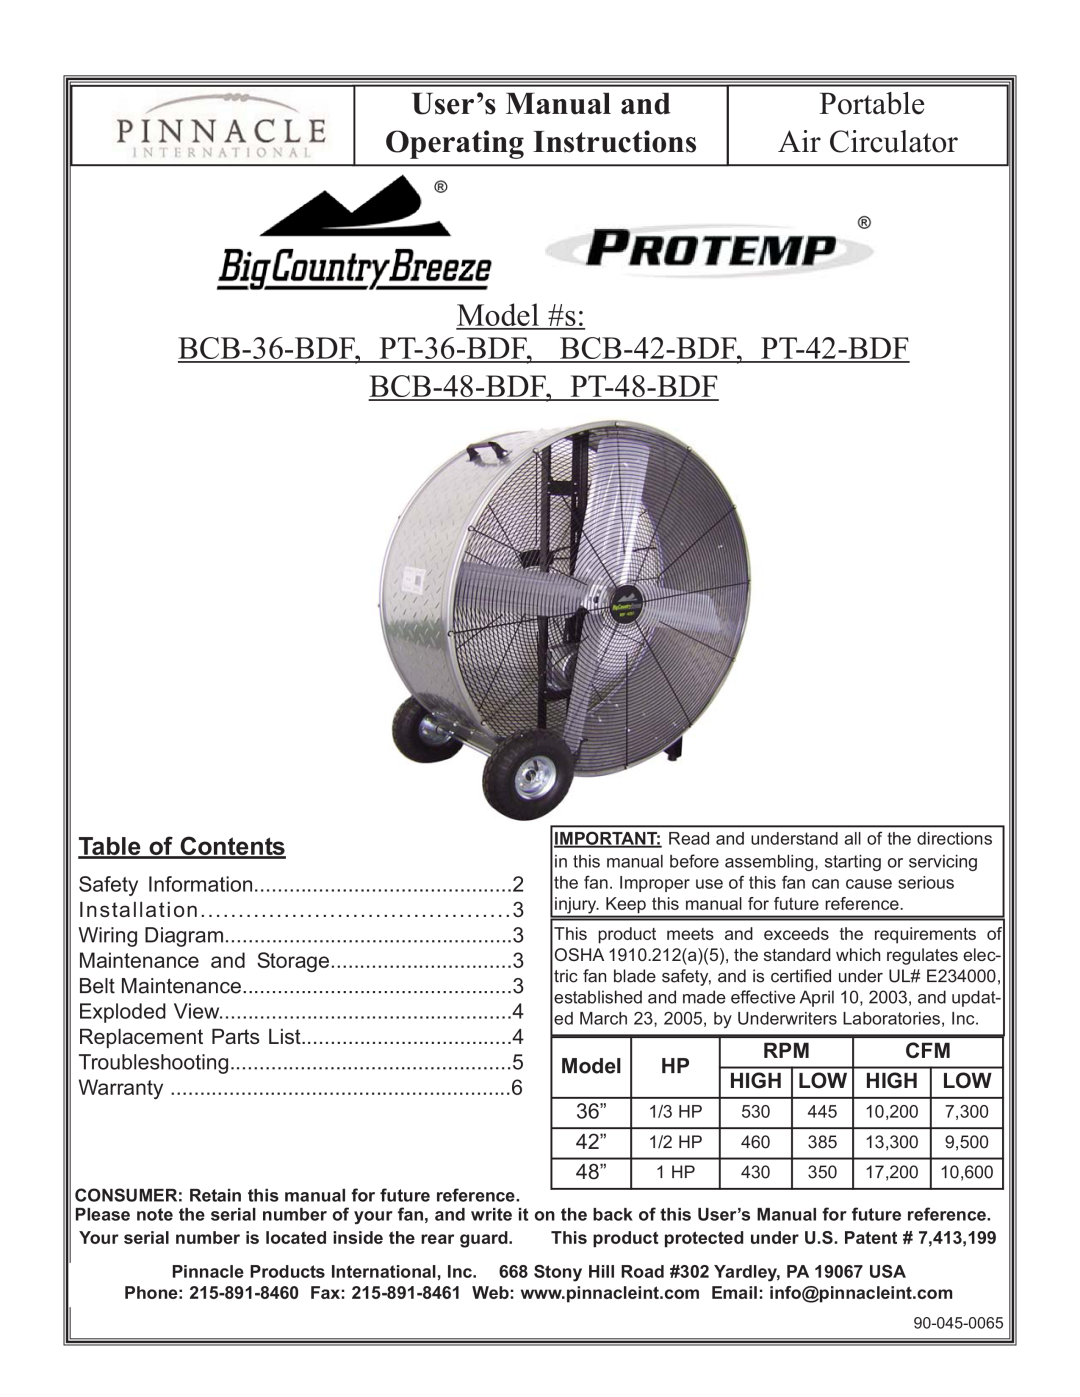 Pinnacle Products International PT-36-BDF user manual Portable Air Circulator, Model #s, BCB-48-BDF, PT-48-BDF, High 